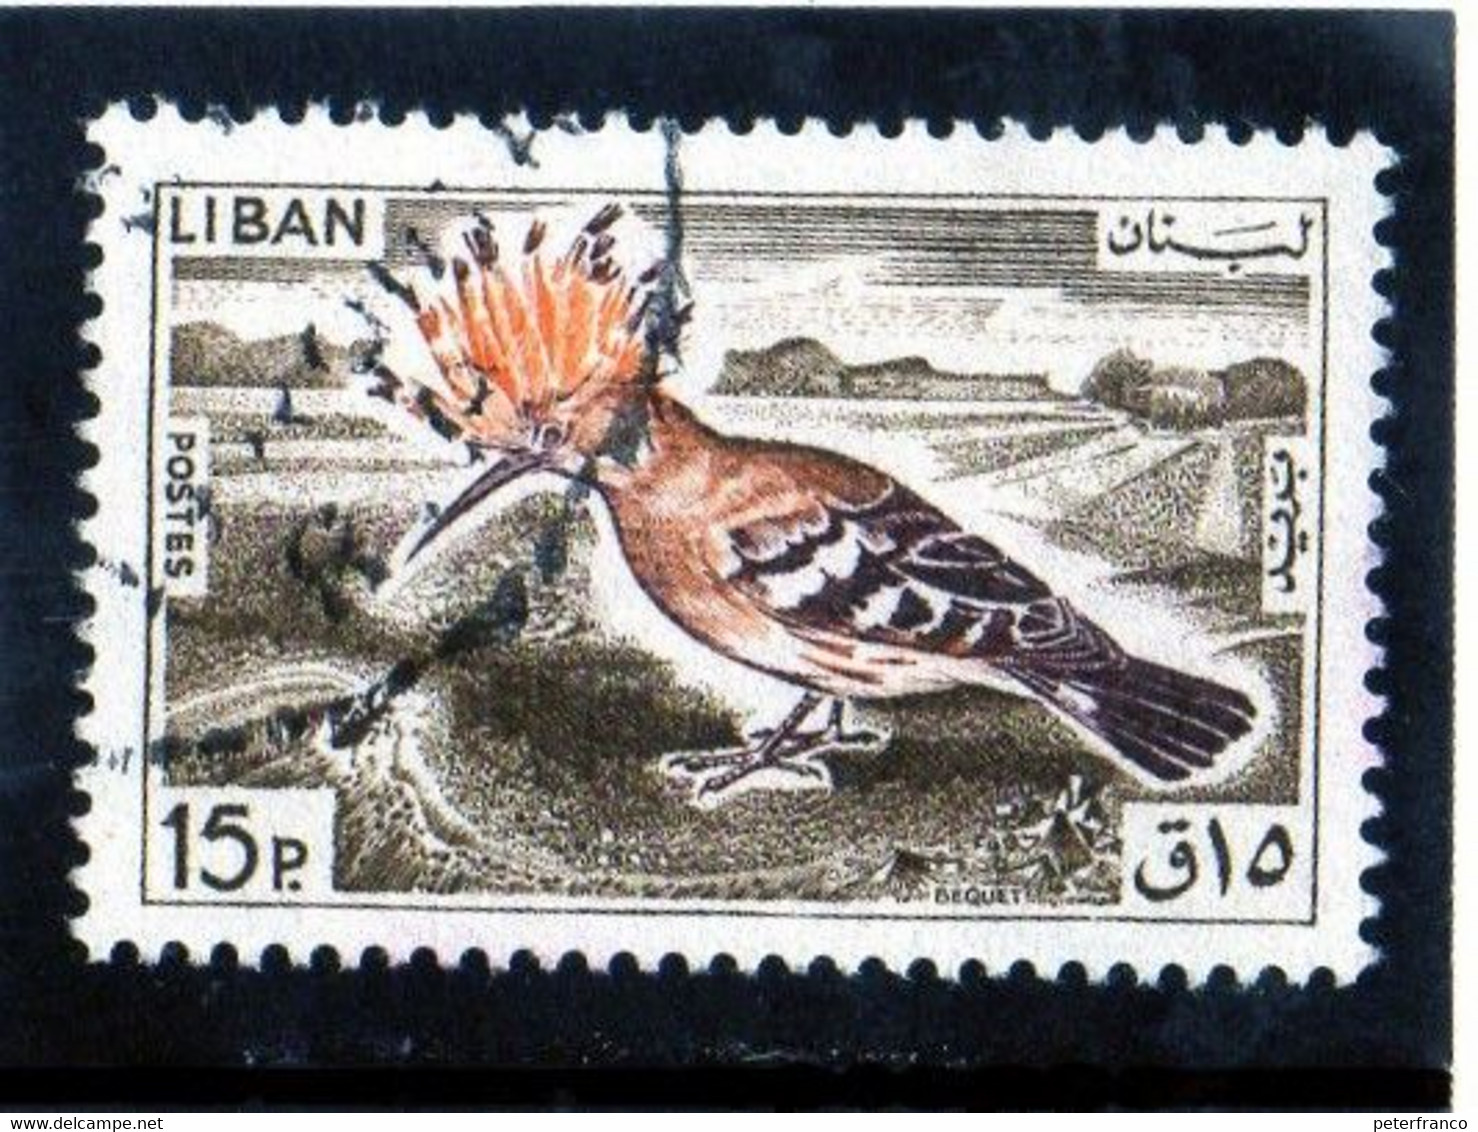 B - 1965 Libano - Uccello - Lebanon